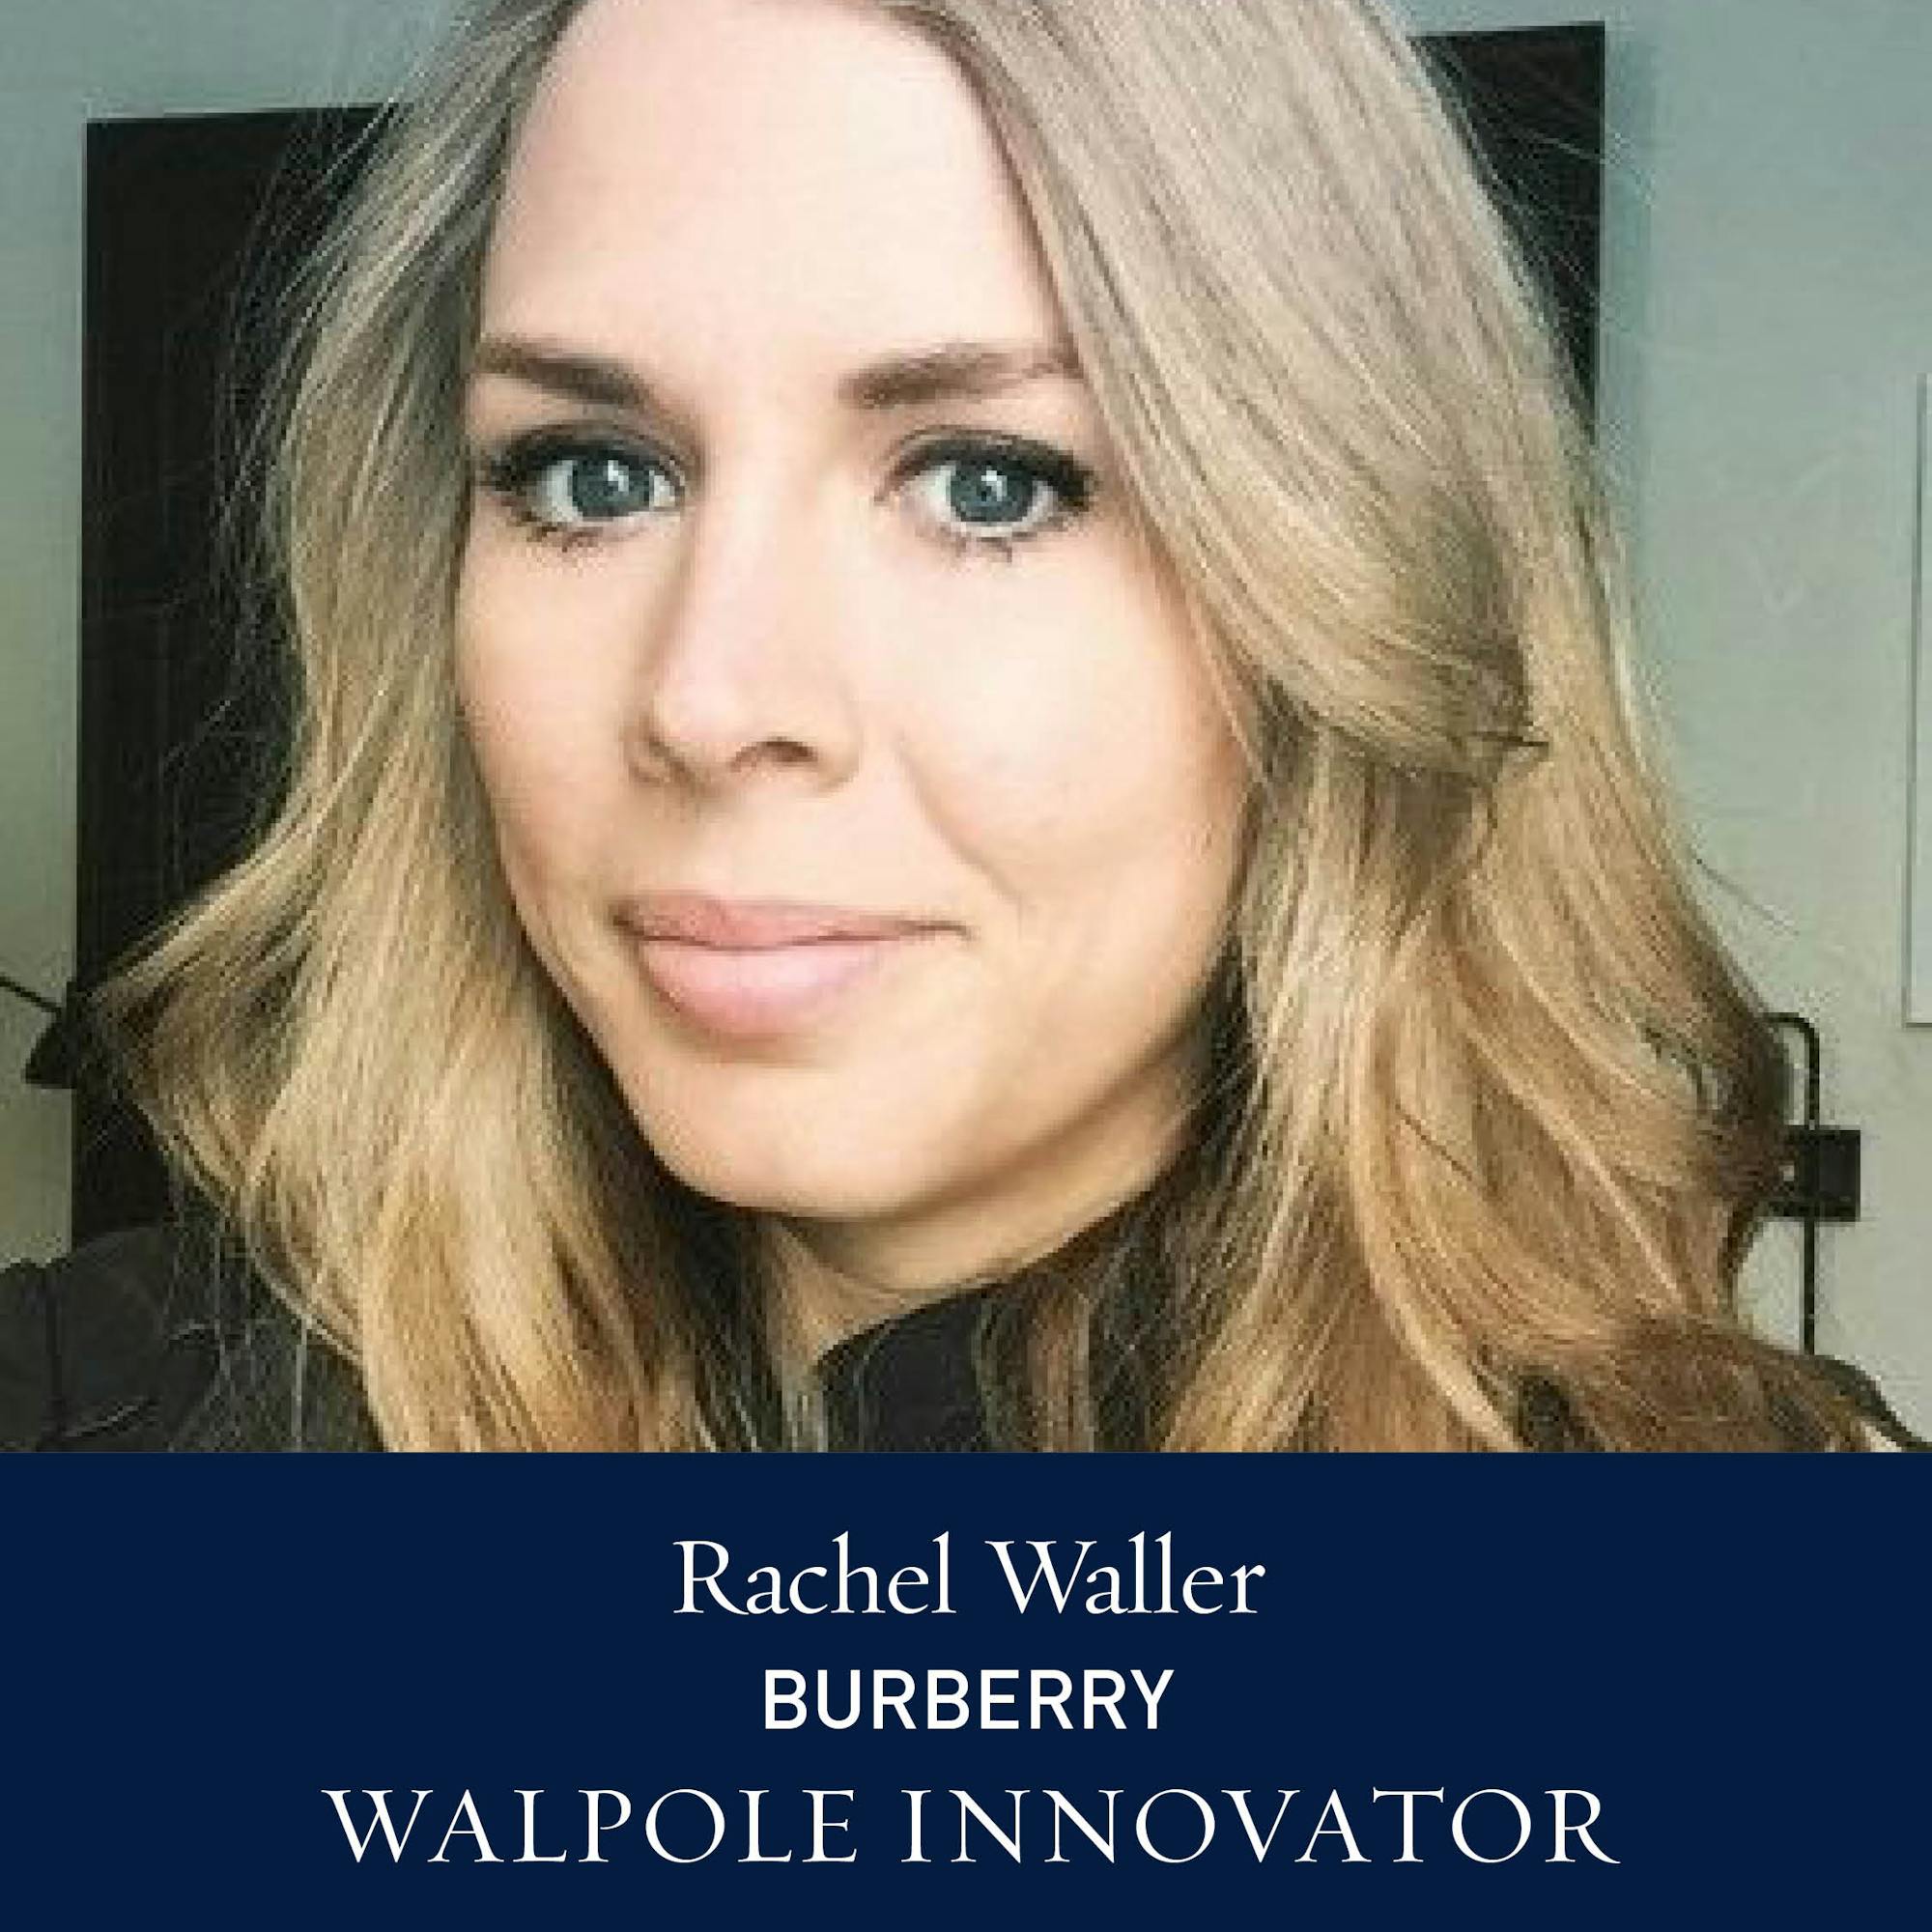 The Innovators: Rachel Waller, Global Vice President Marketing, Digital & Innovation, Burberry